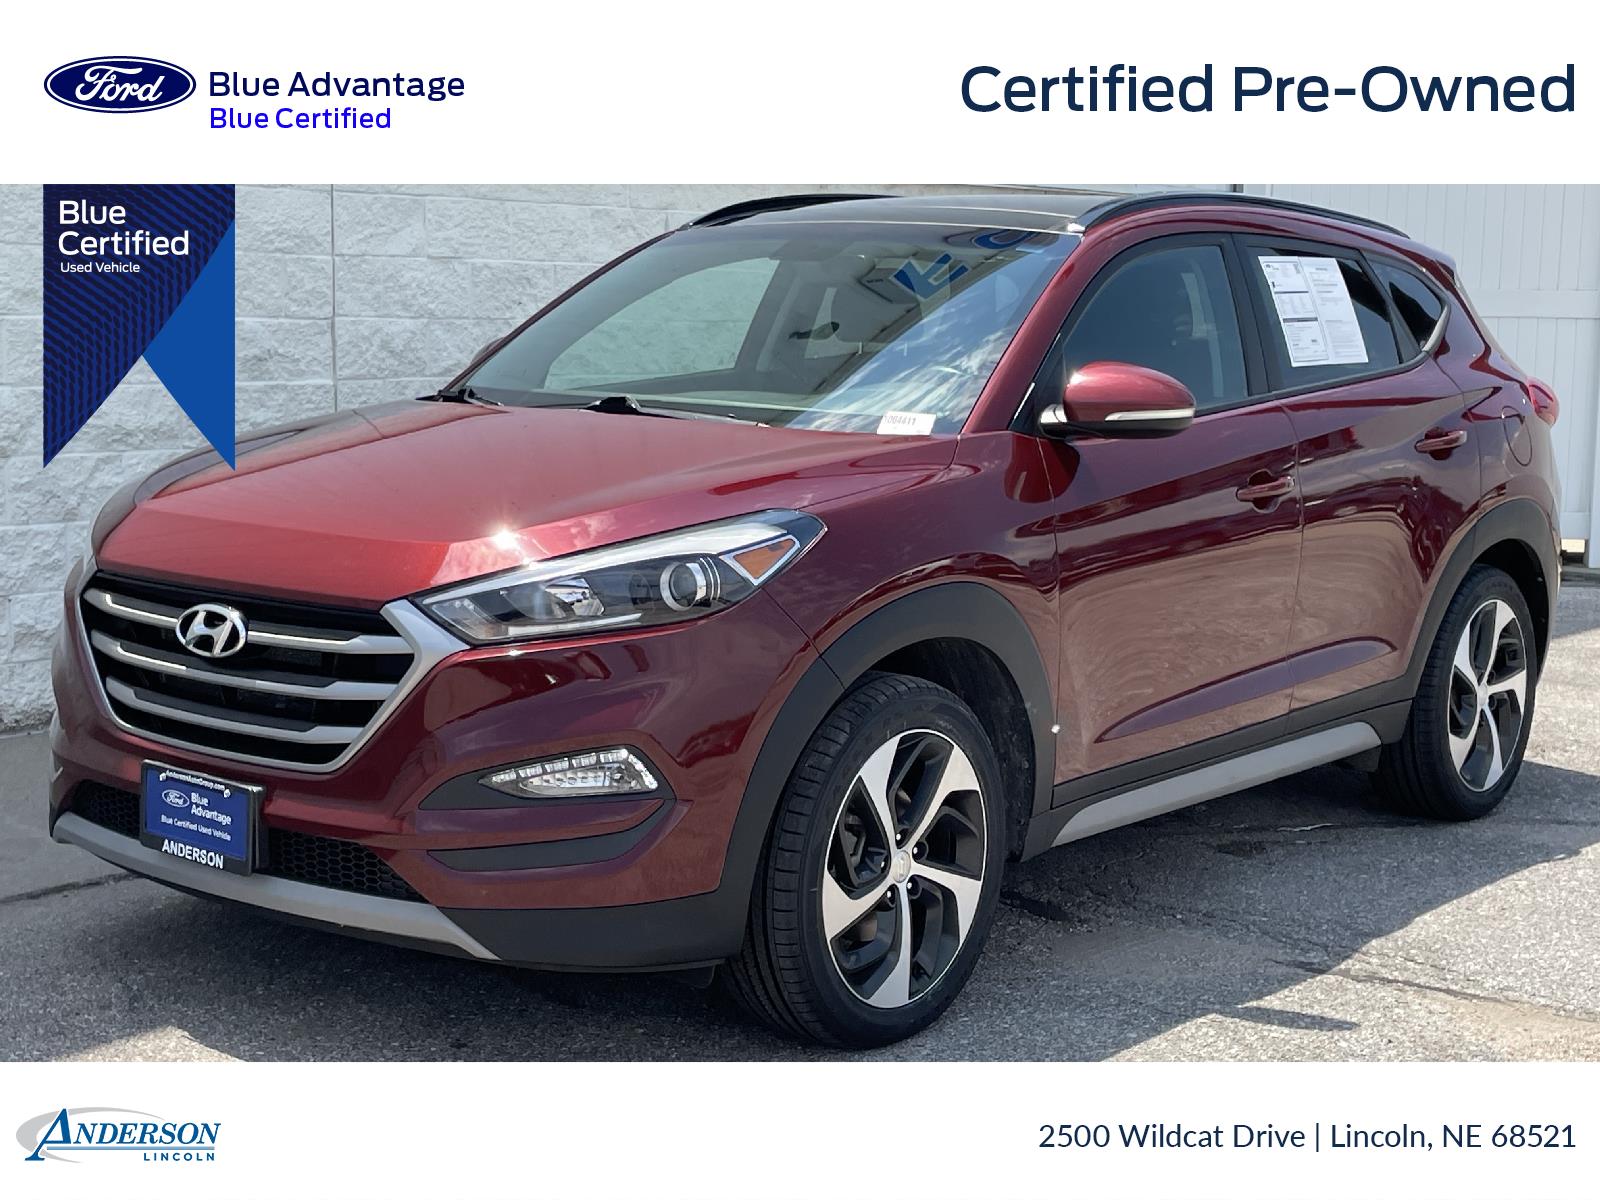 Used 2018 Hyundai Tucson Value Stock: 1004411